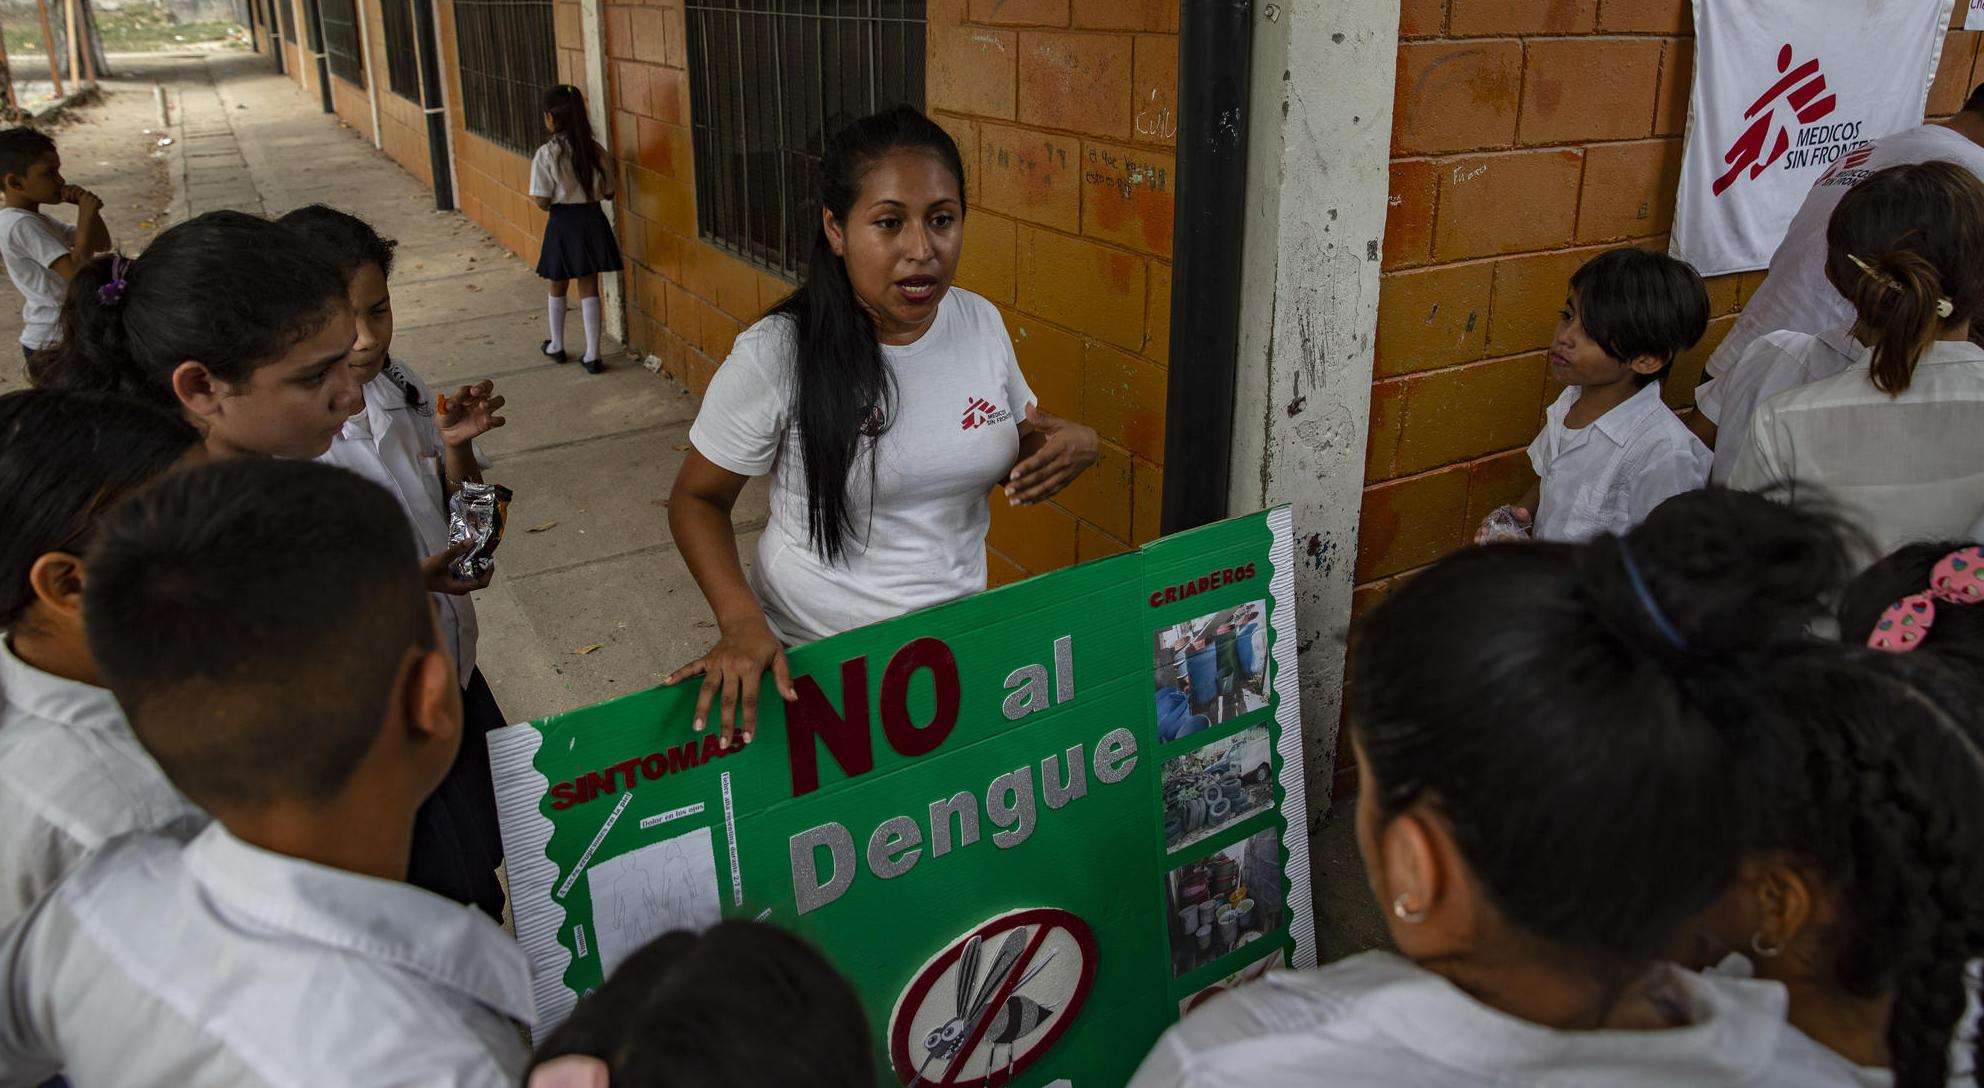 Dengue fever epidemic - San Pedro Sula, Honduras